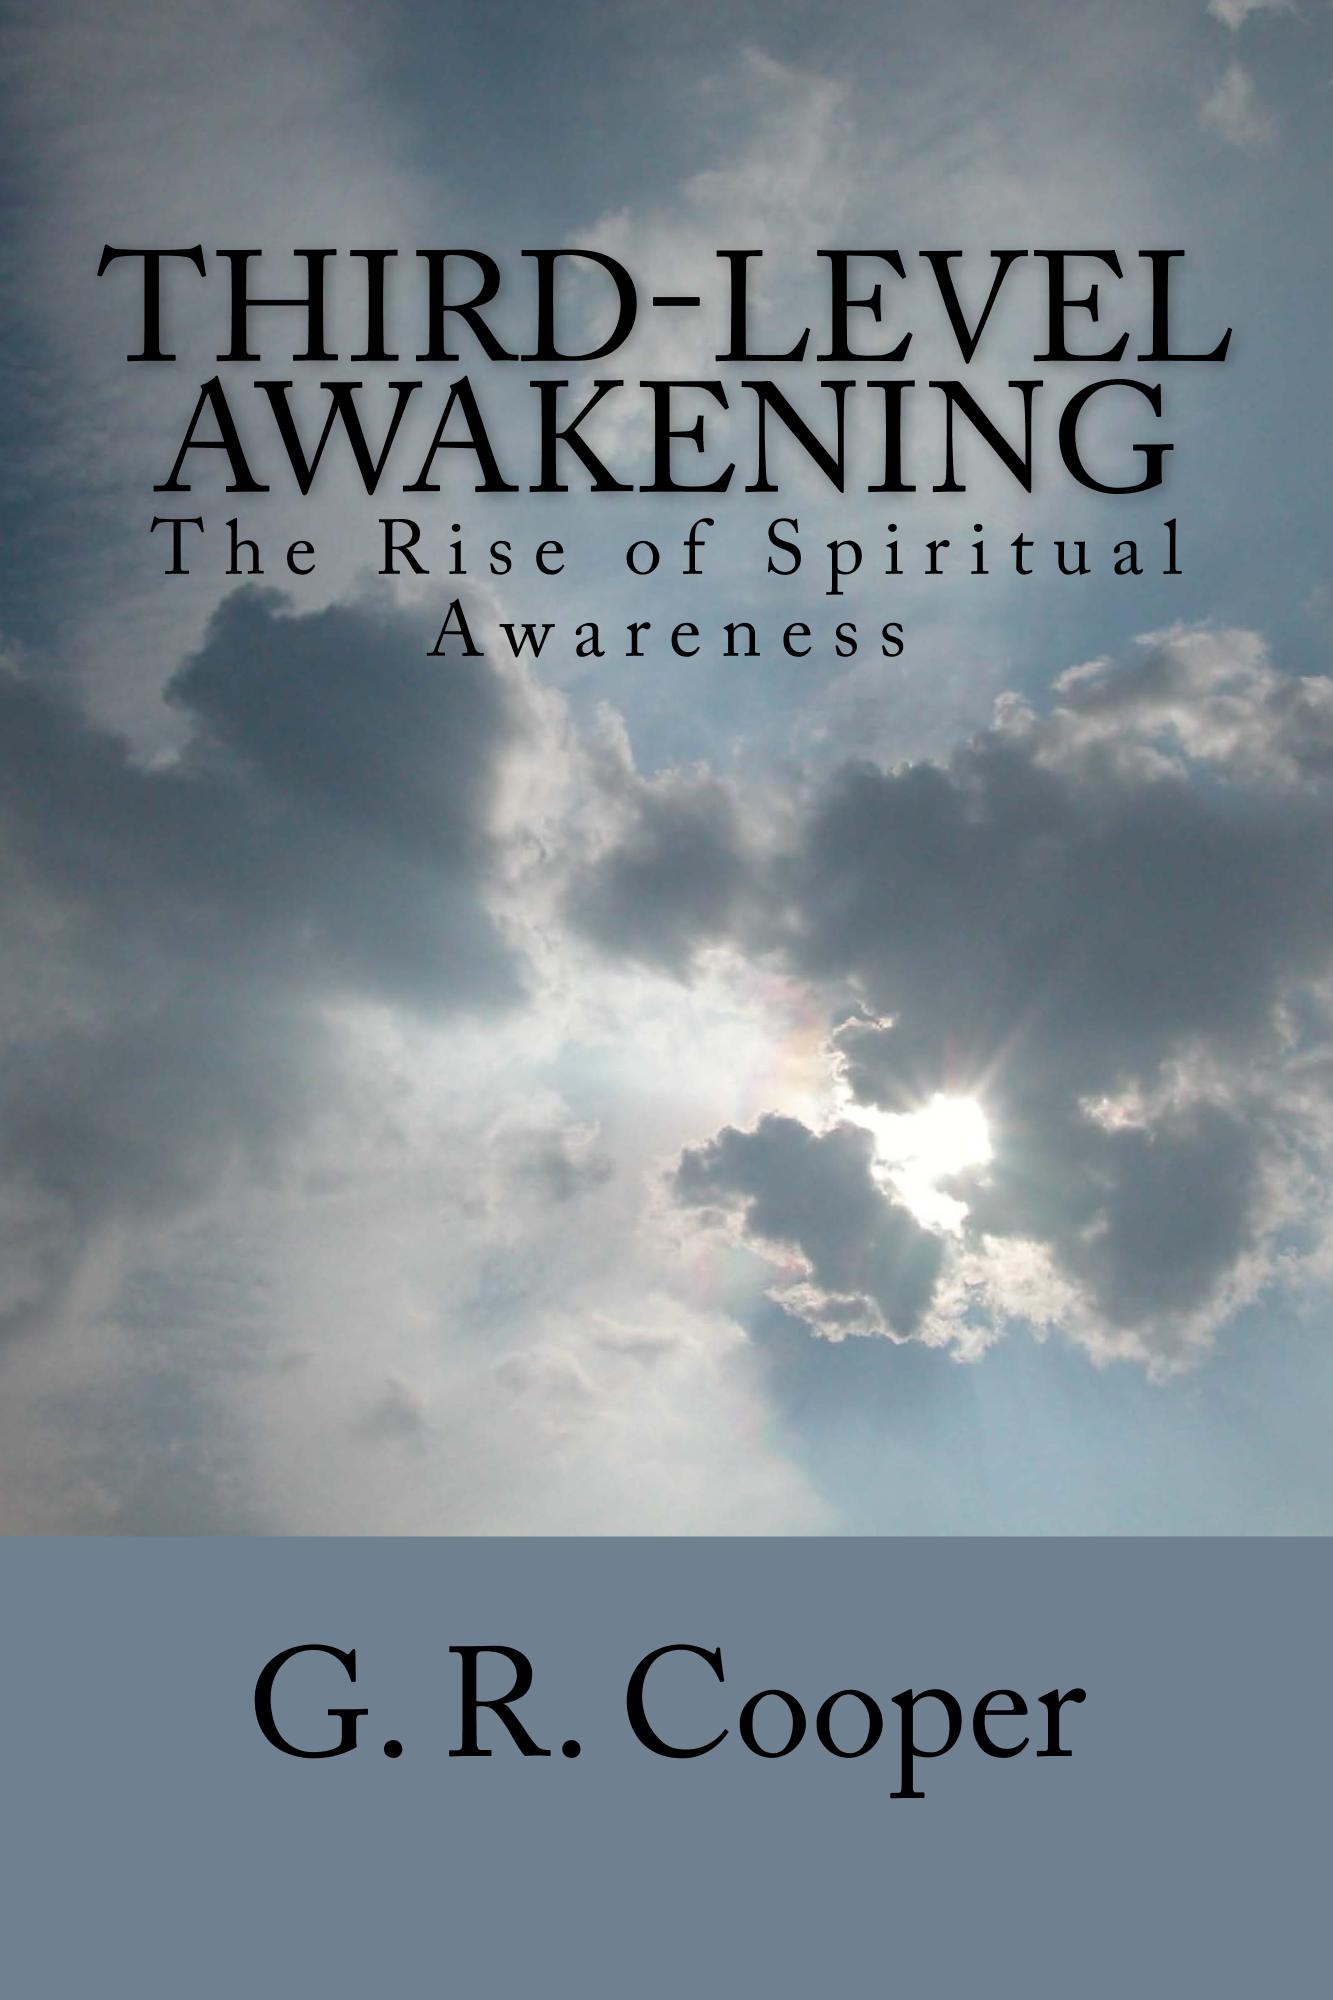 Third-Level Awakening - The Rise of Spiritual Awareness - book author George